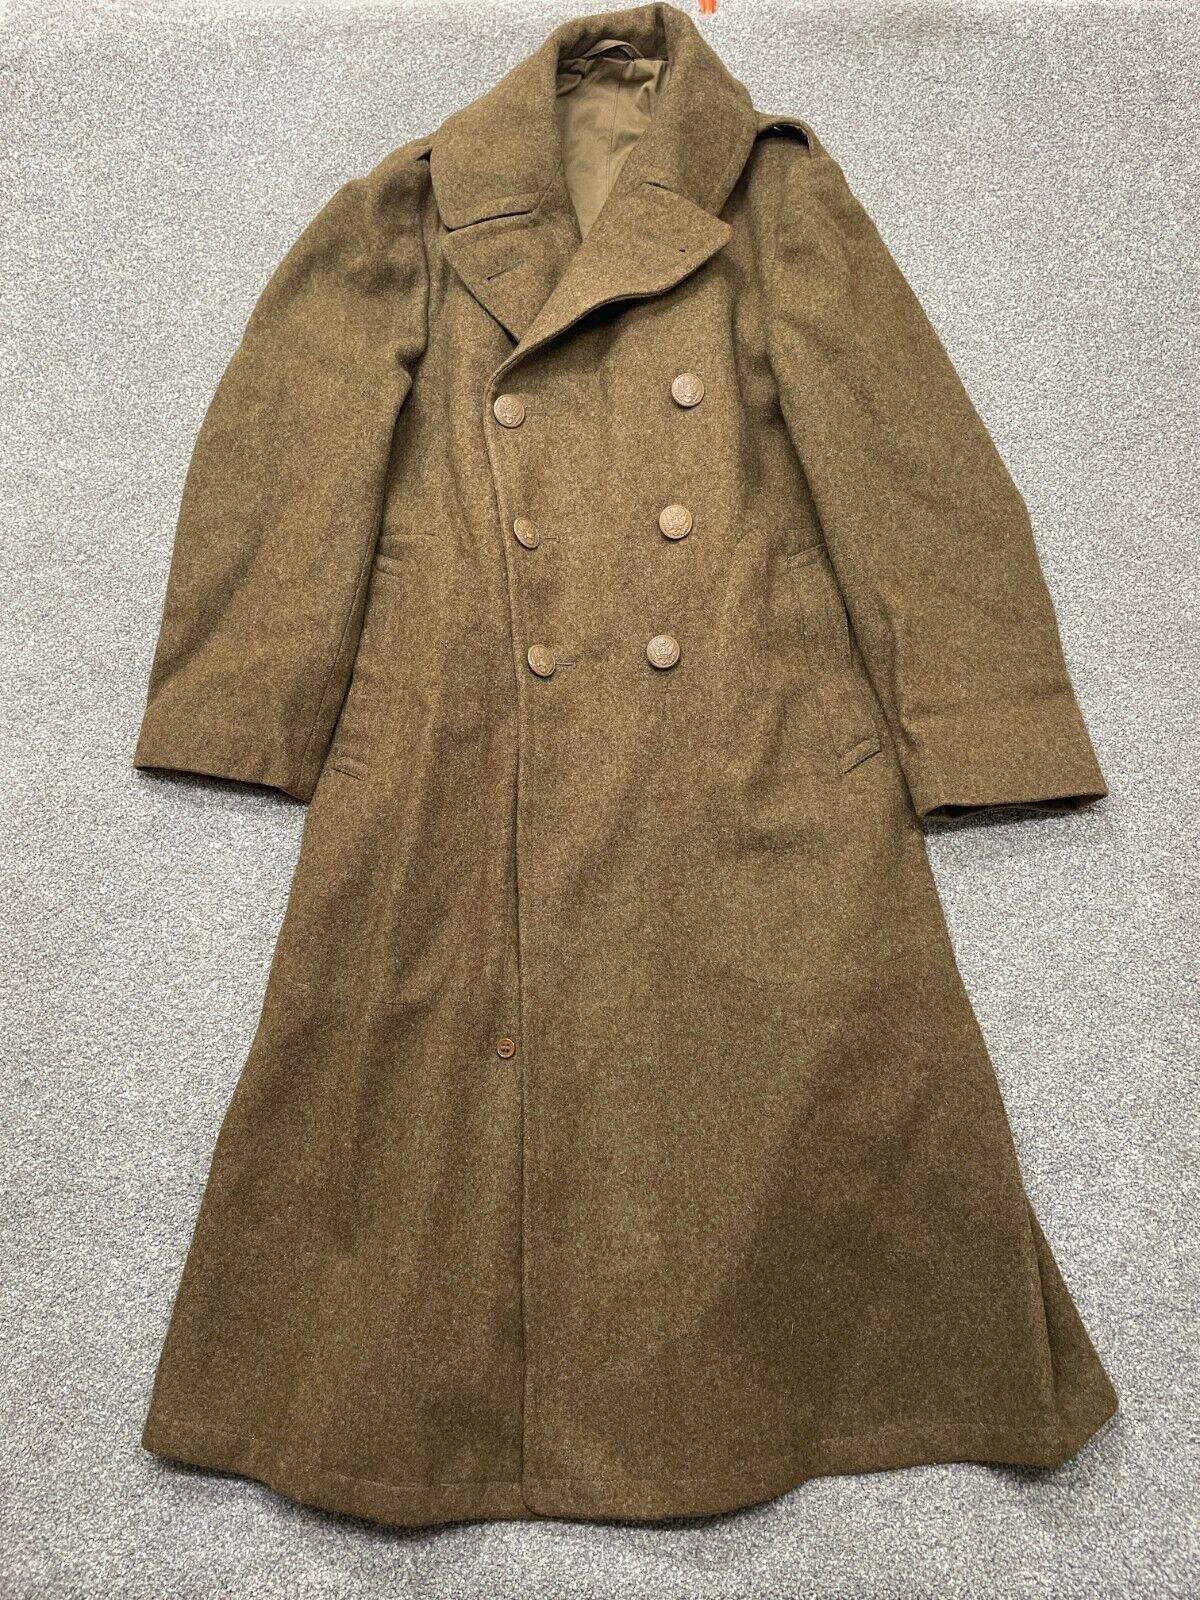 VINTAGE WWII Jacket 36 Military Trench Overcoat Mackinaw Melton Wool WW2 1943